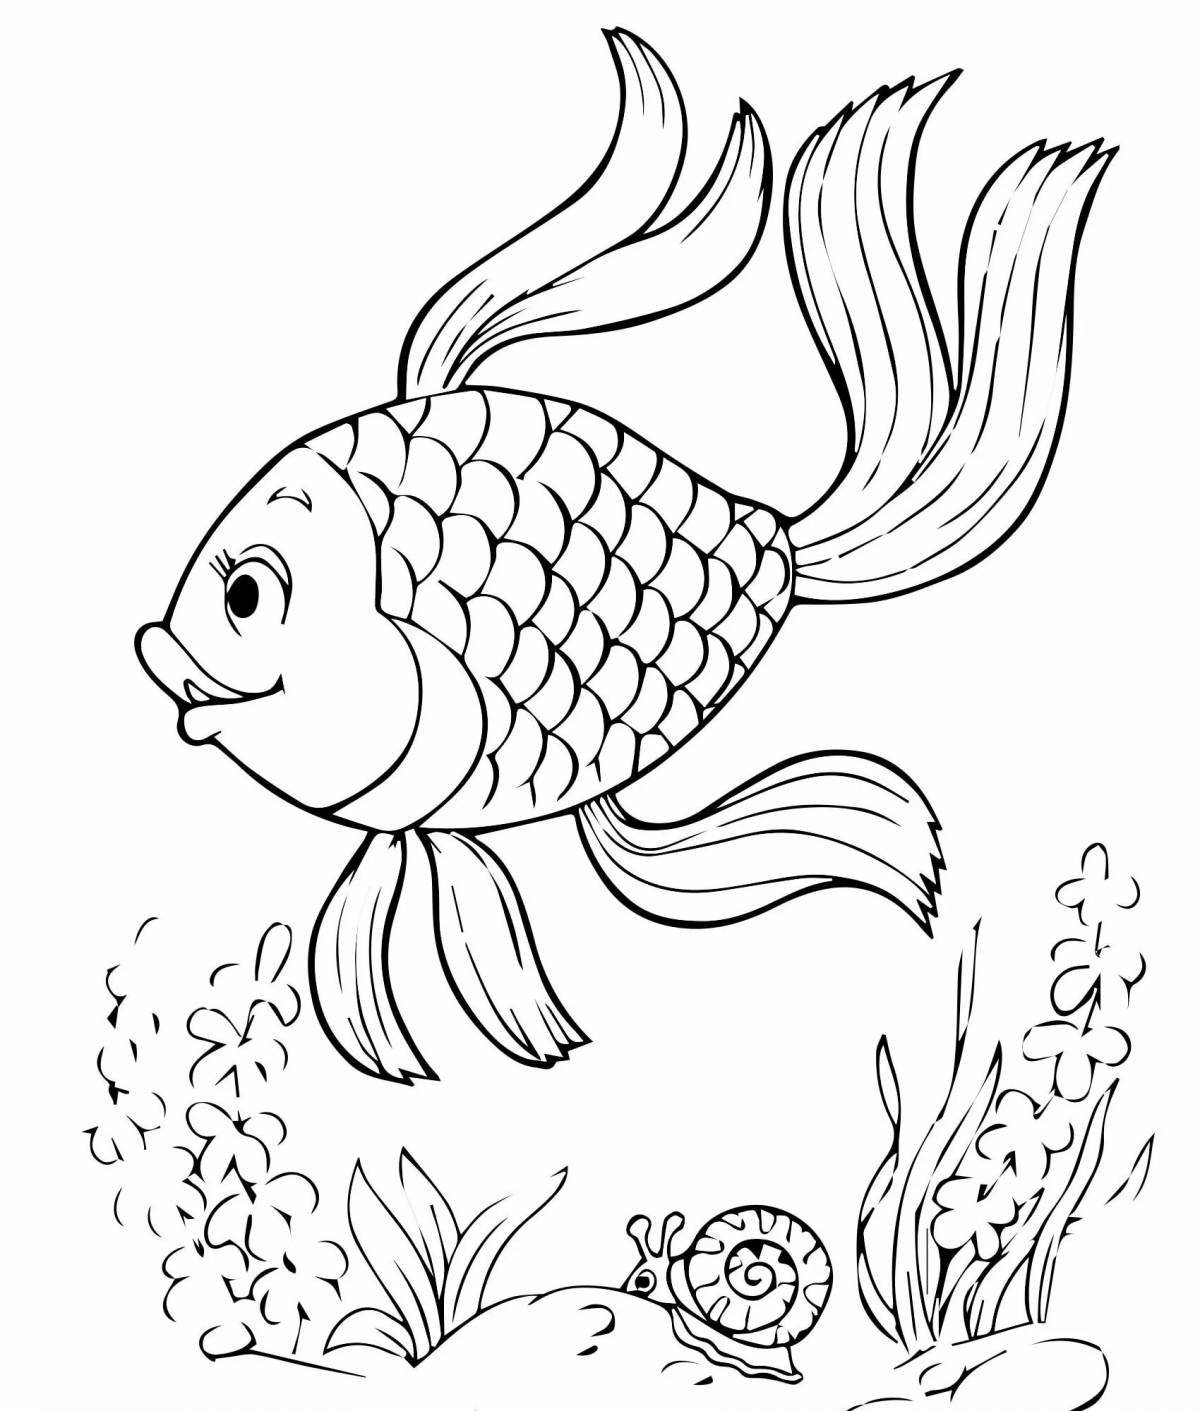 Goldfish coloring book